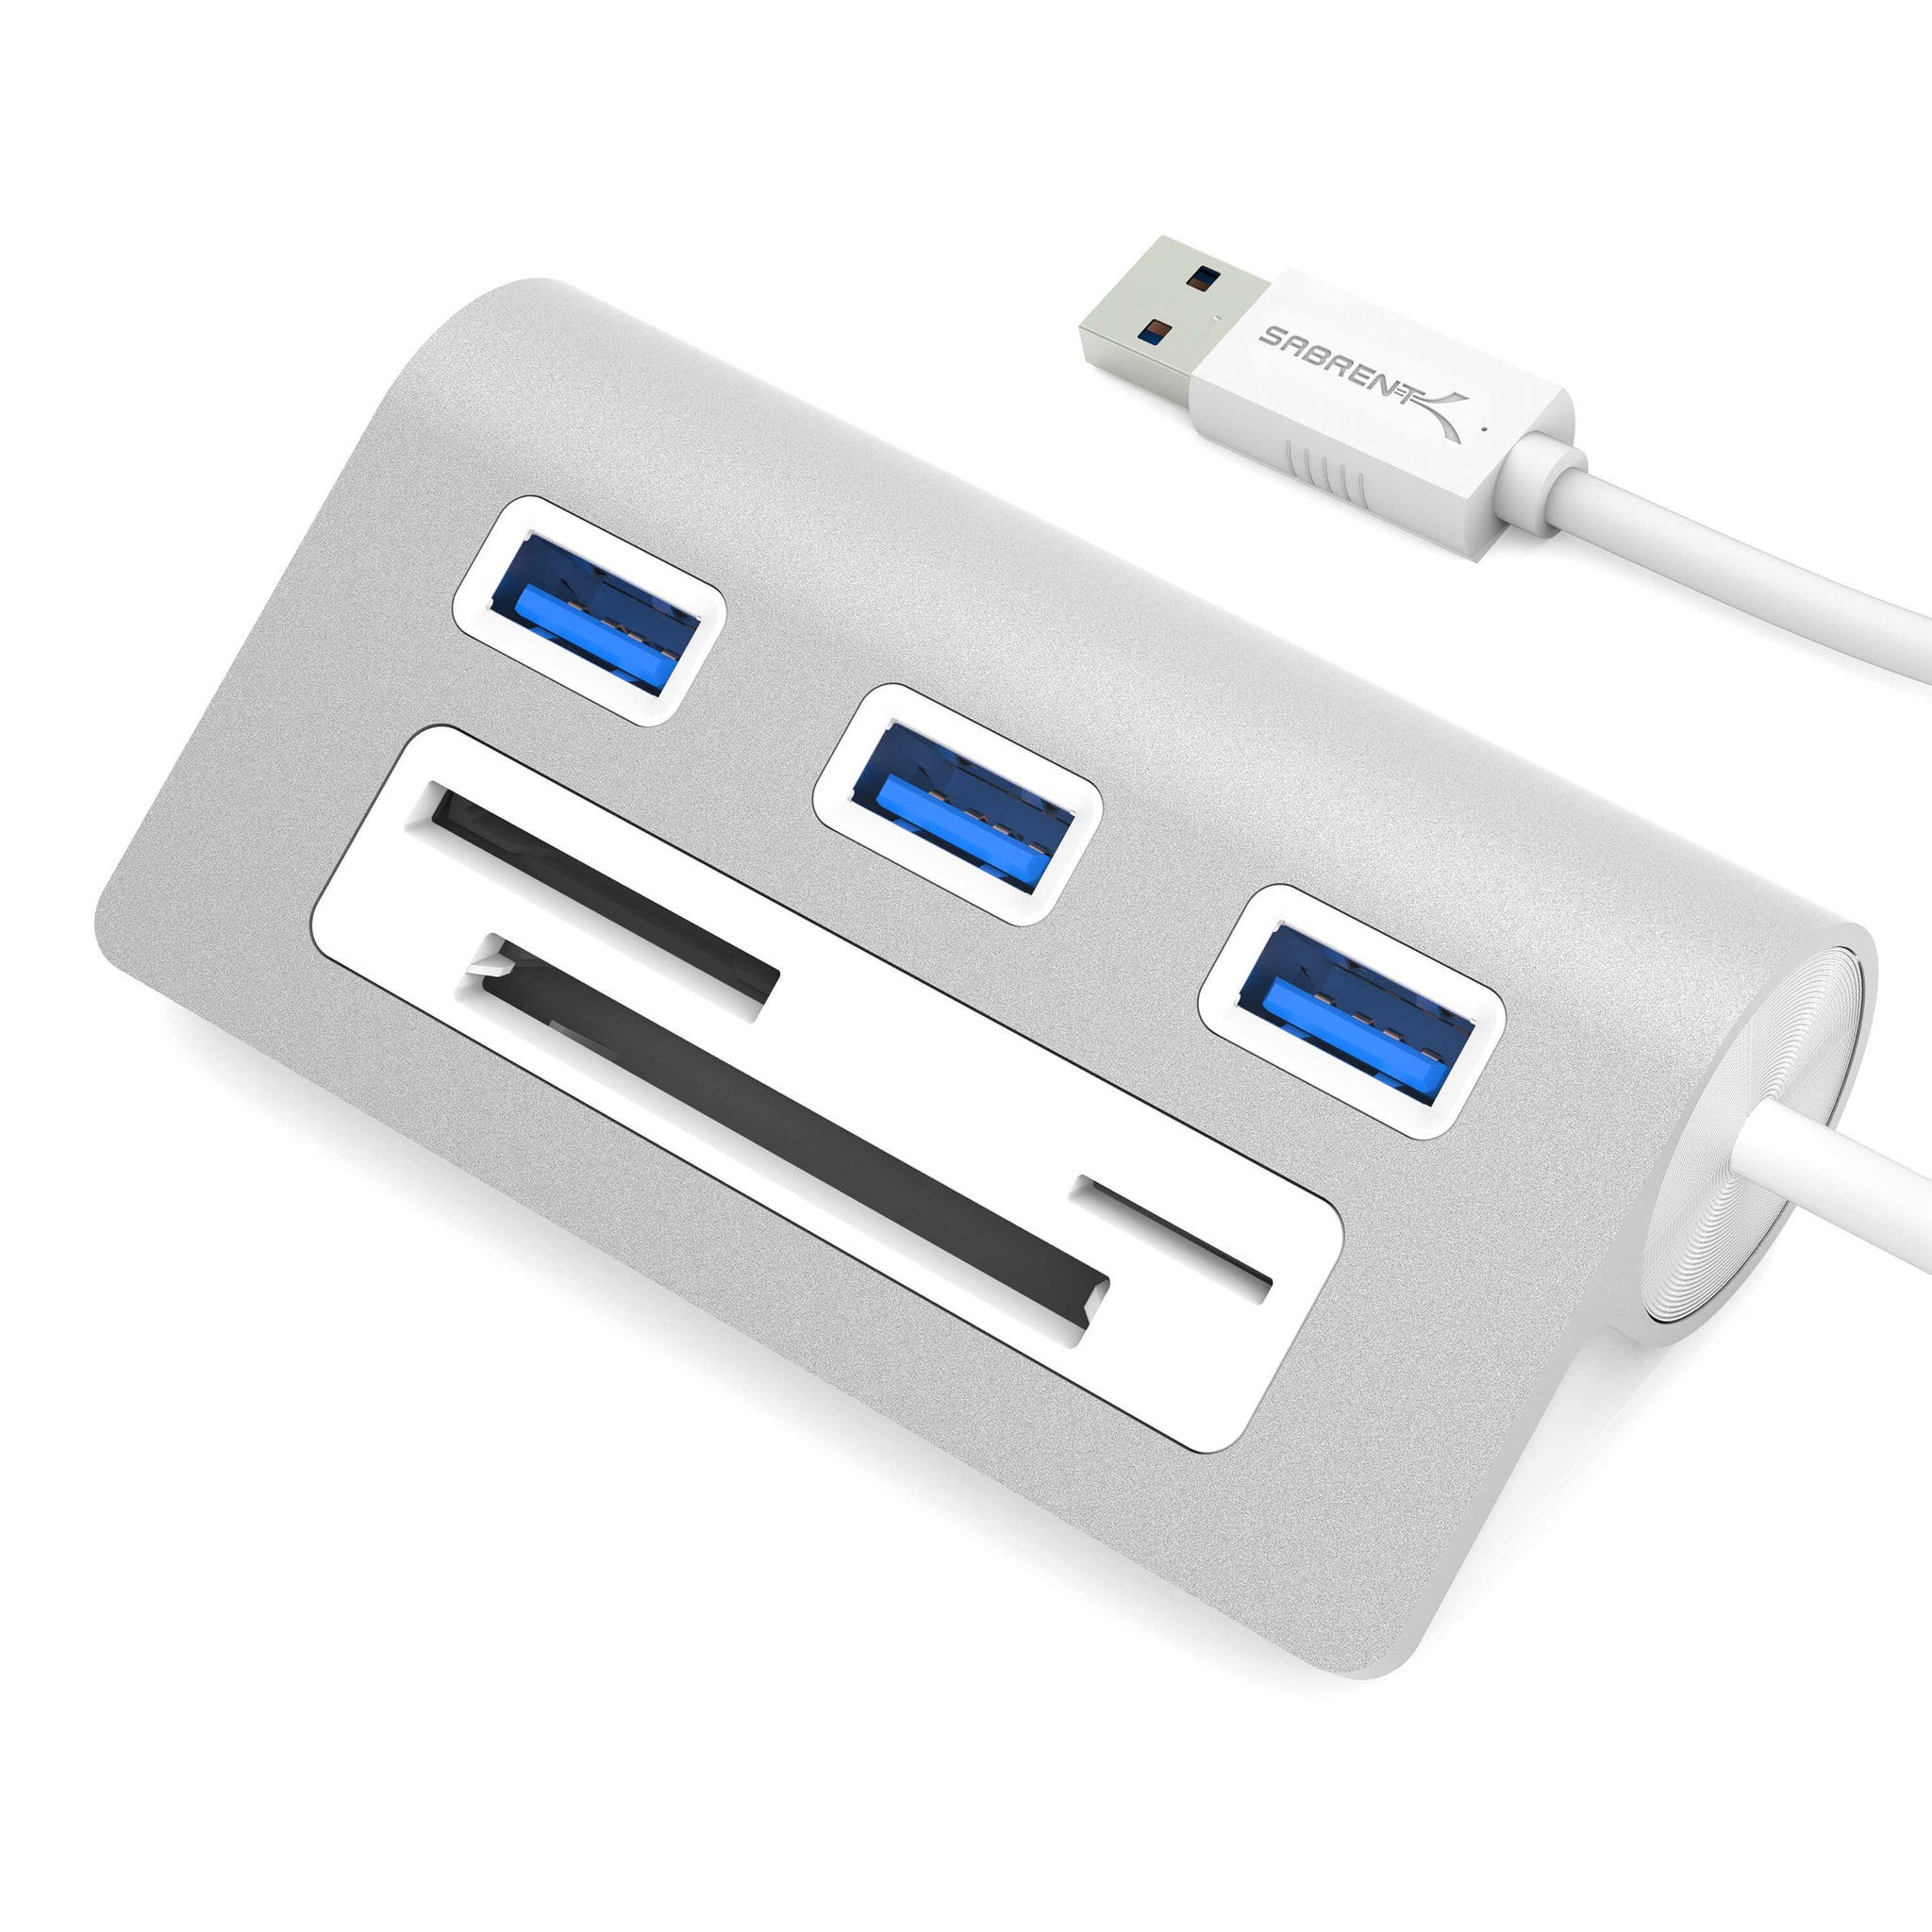 Sabrent 7-Port USB 3.0 Hub with 3 Smart Charging Ports